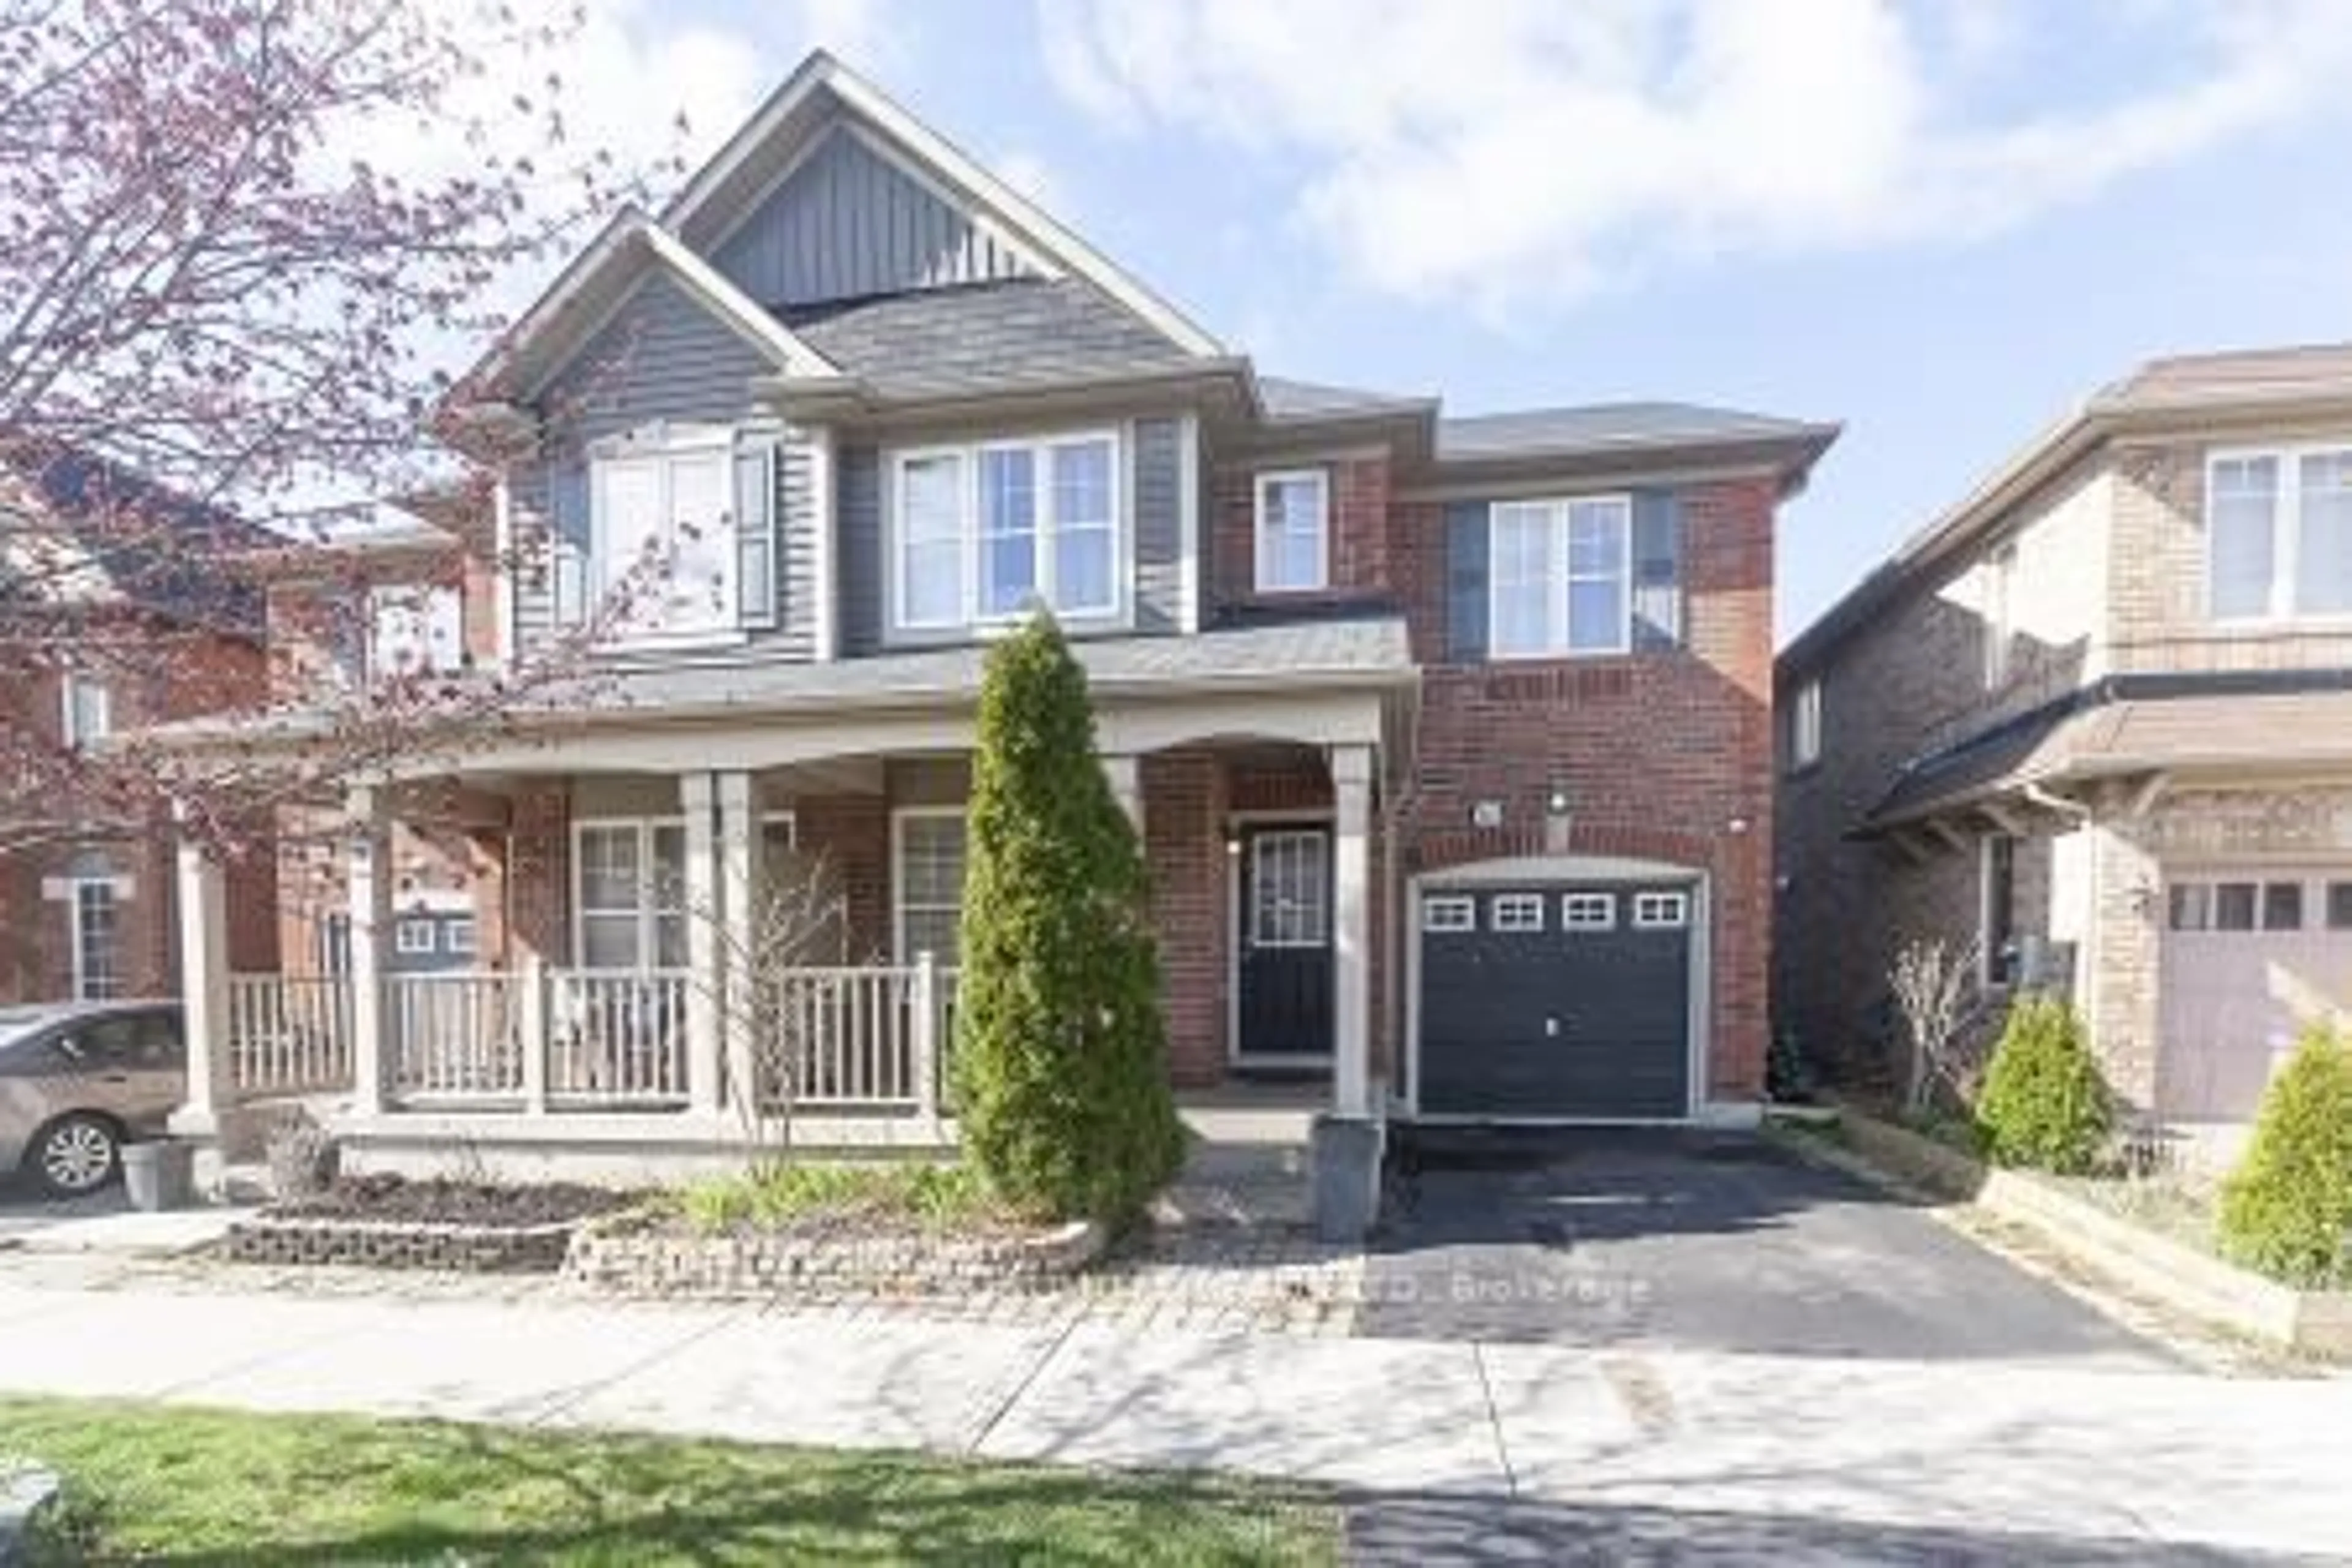 Home with brick exterior material for 912 Scott Blvd, Milton Ontario L9T 7C5